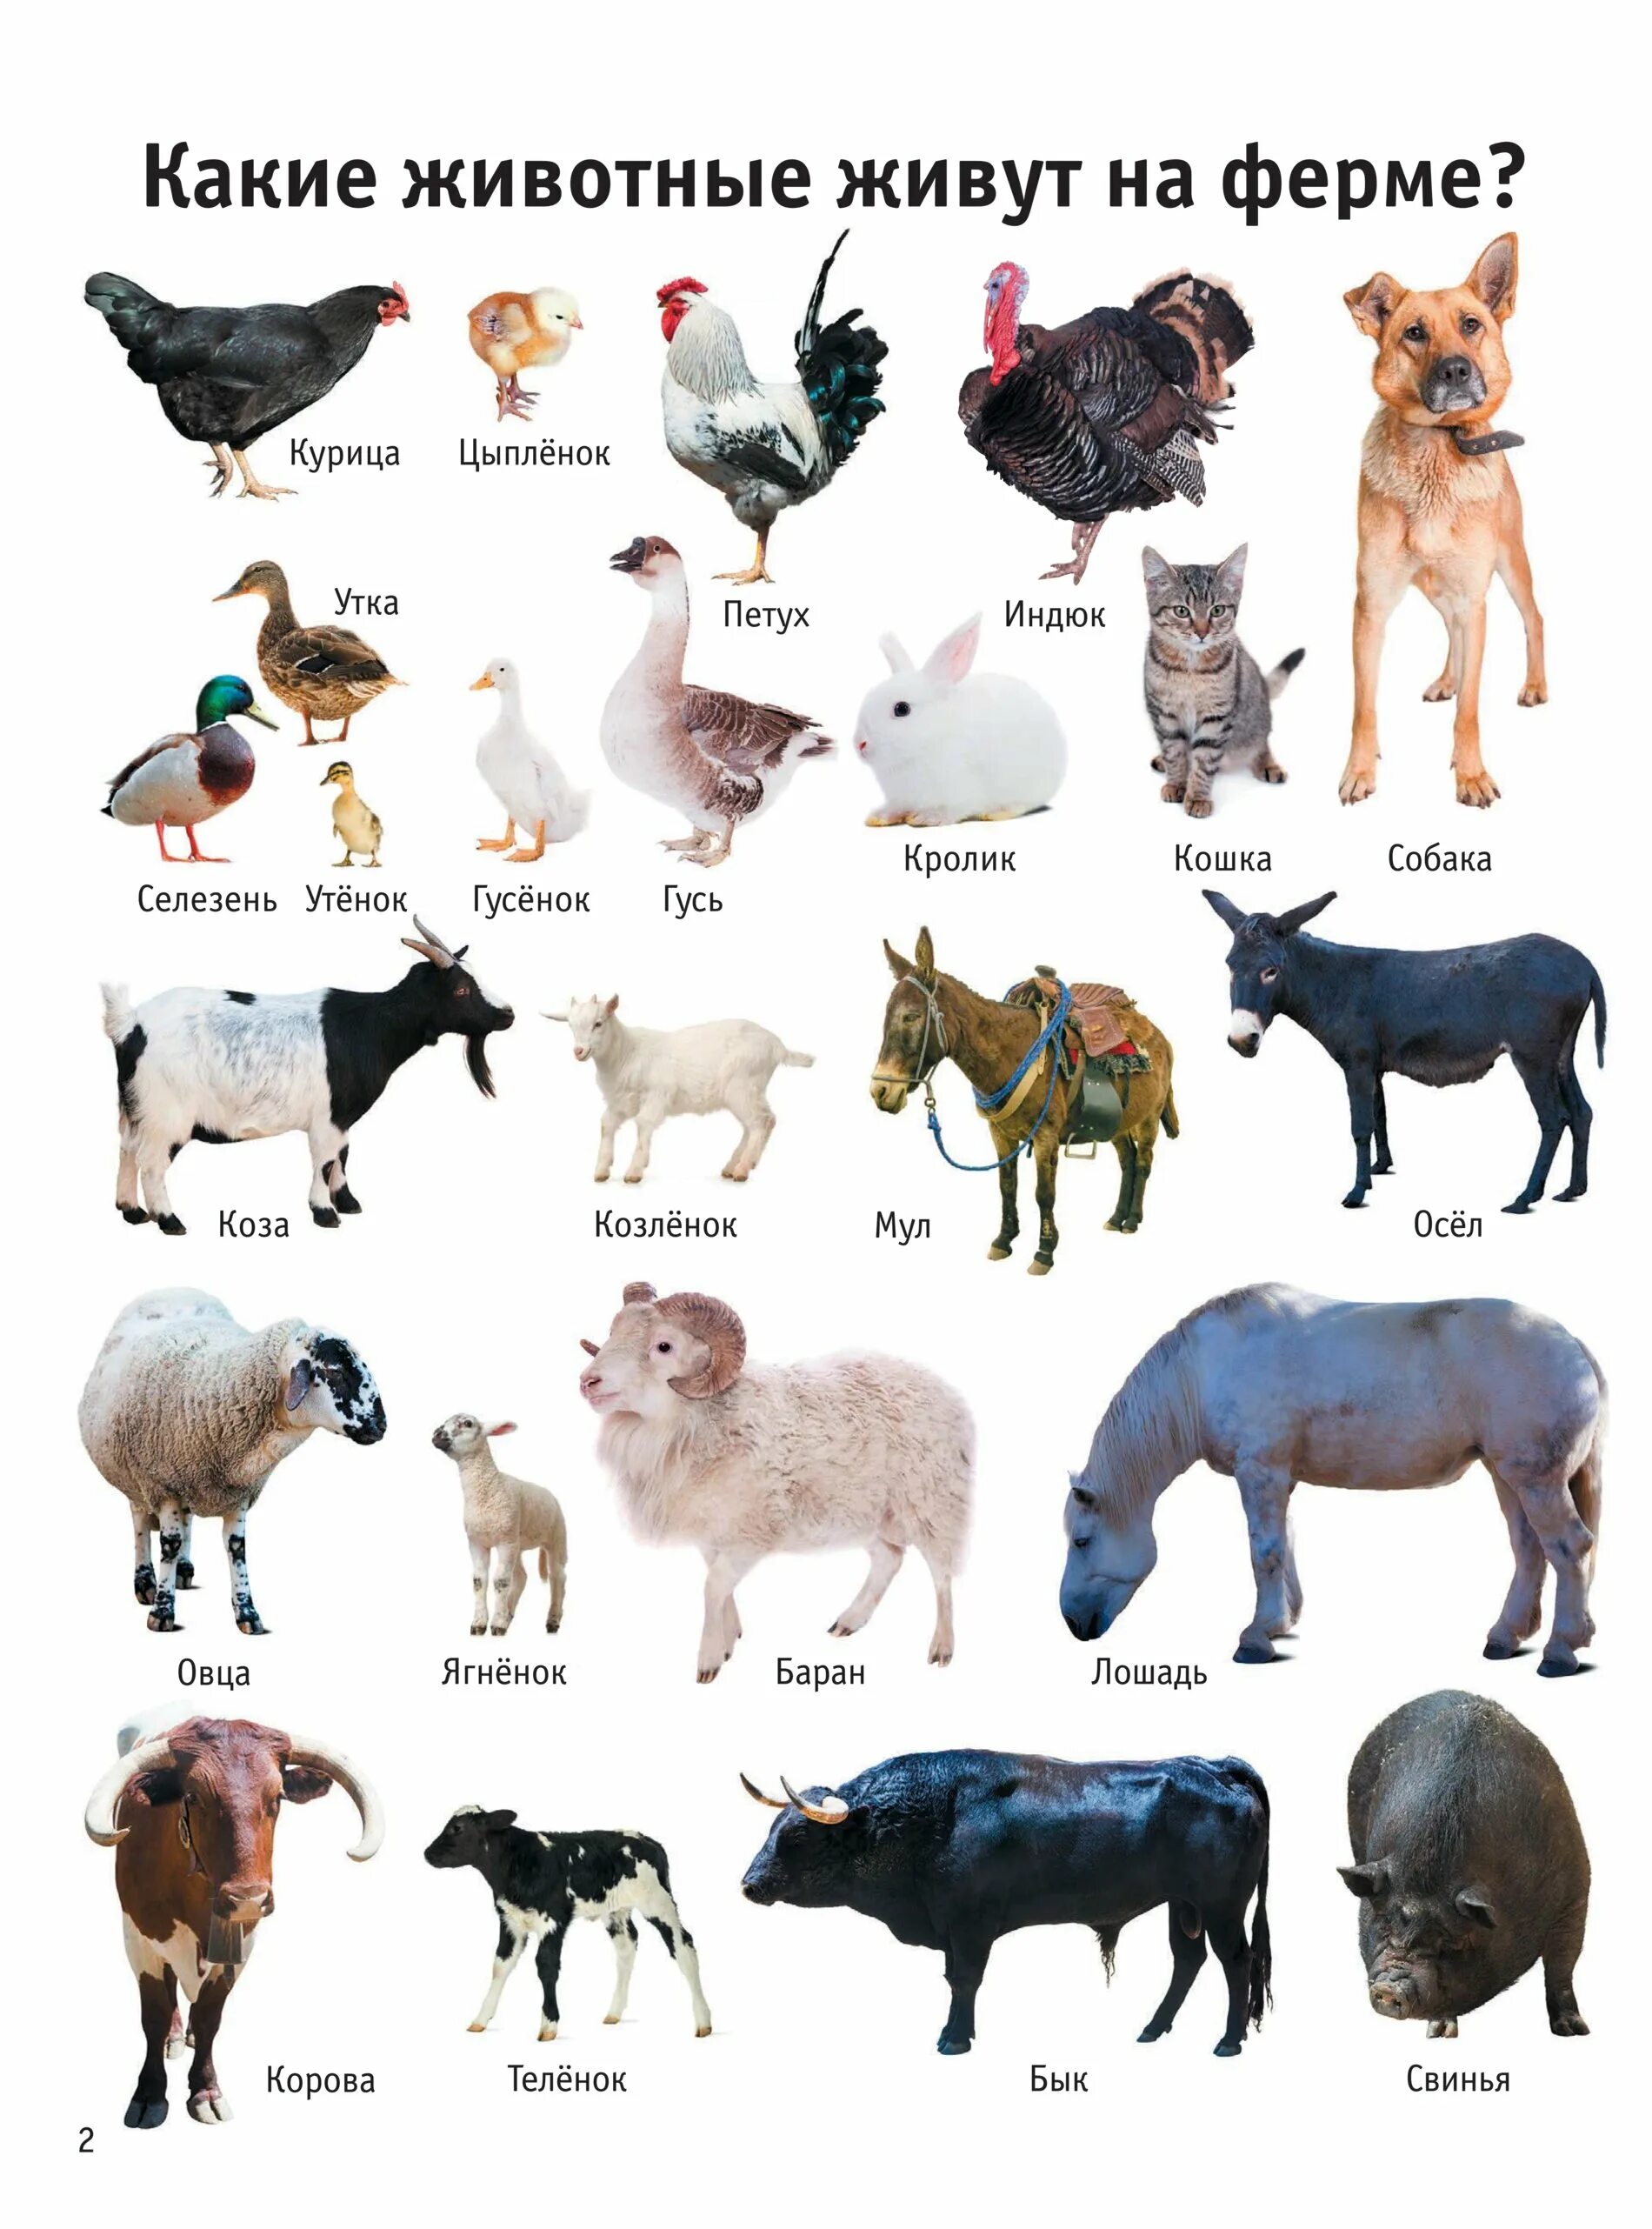 Каких животных ты знаешь. Домашние животные. Домашние животные список. Название домашних жывотны. Названия домашних живот.